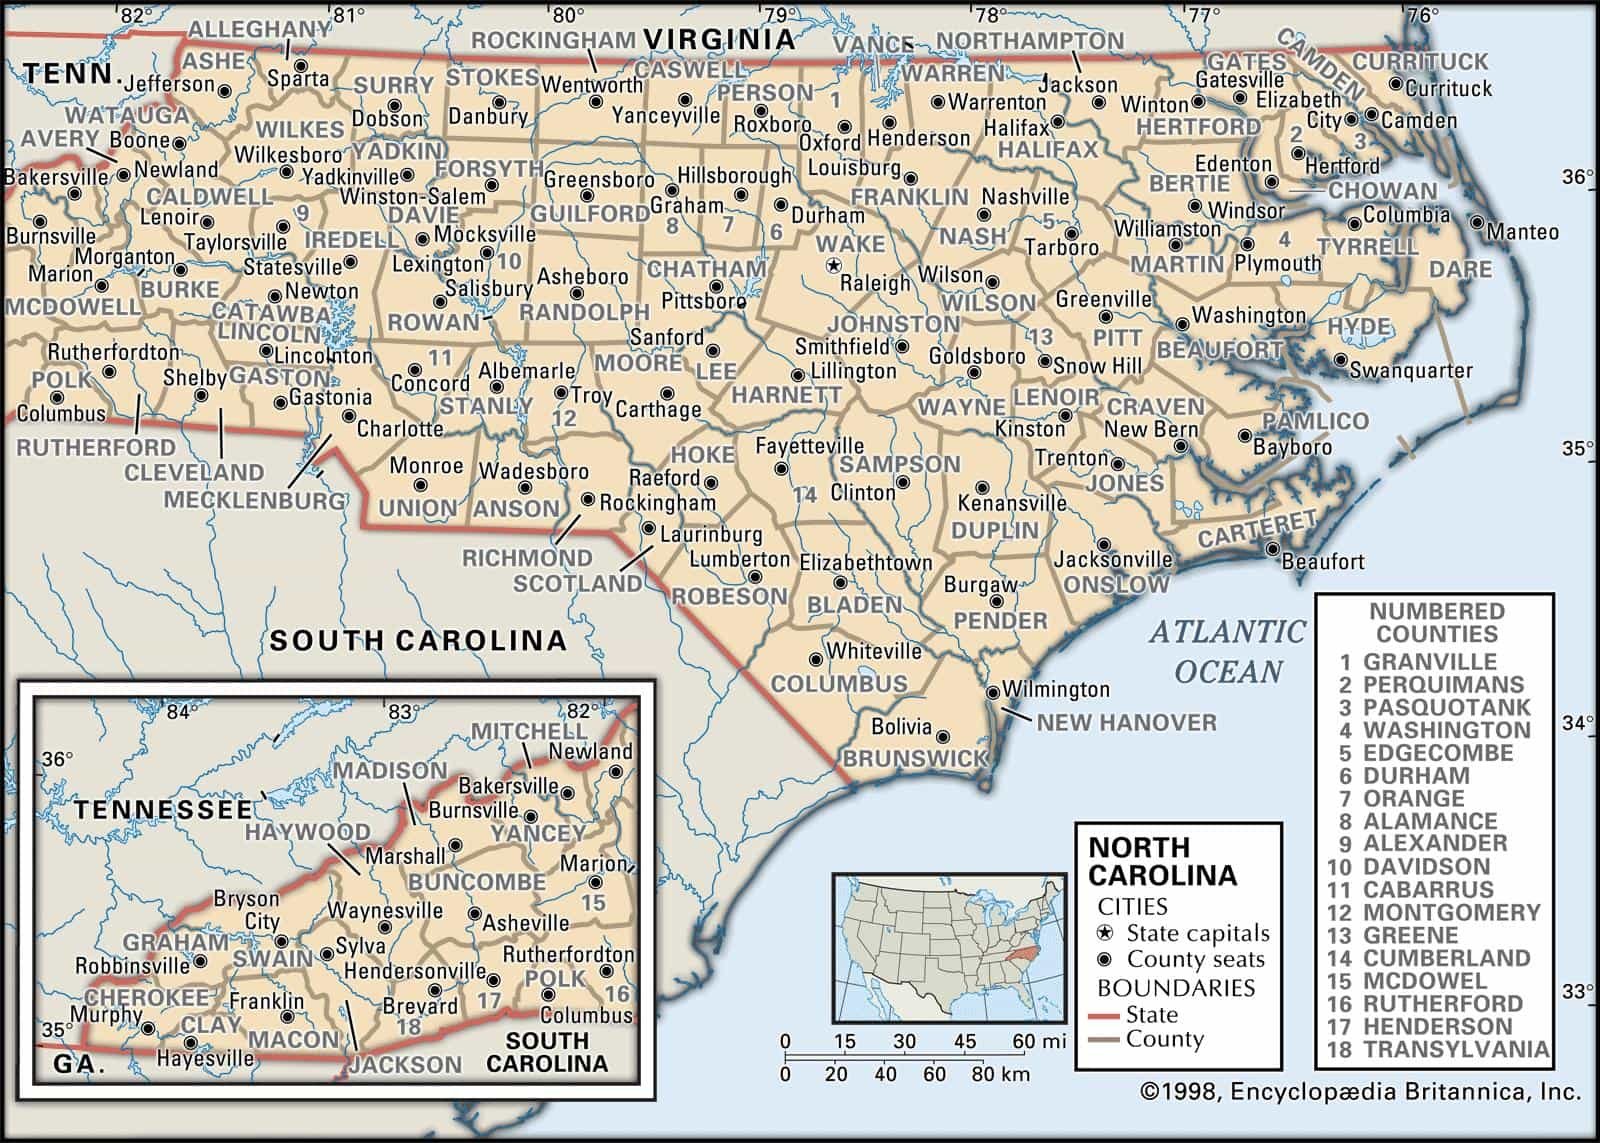 Alphabetical list of North Carolina Counties